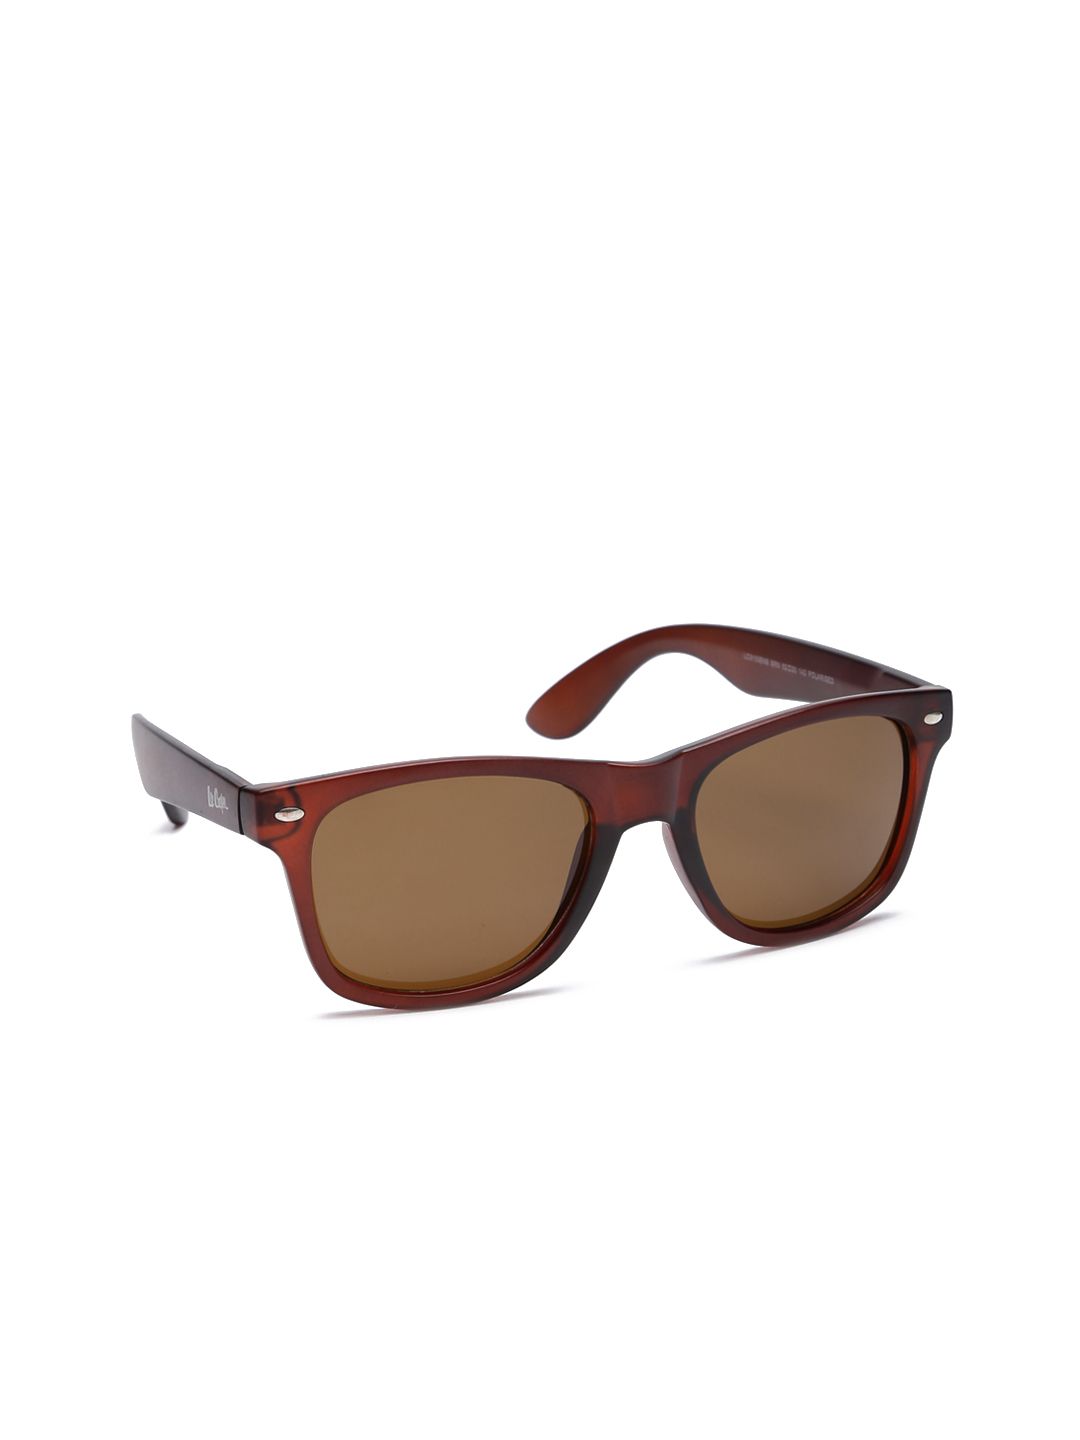 Lee Cooper Unisex Wayfarer Sunglasses LC9150ENB Price in India